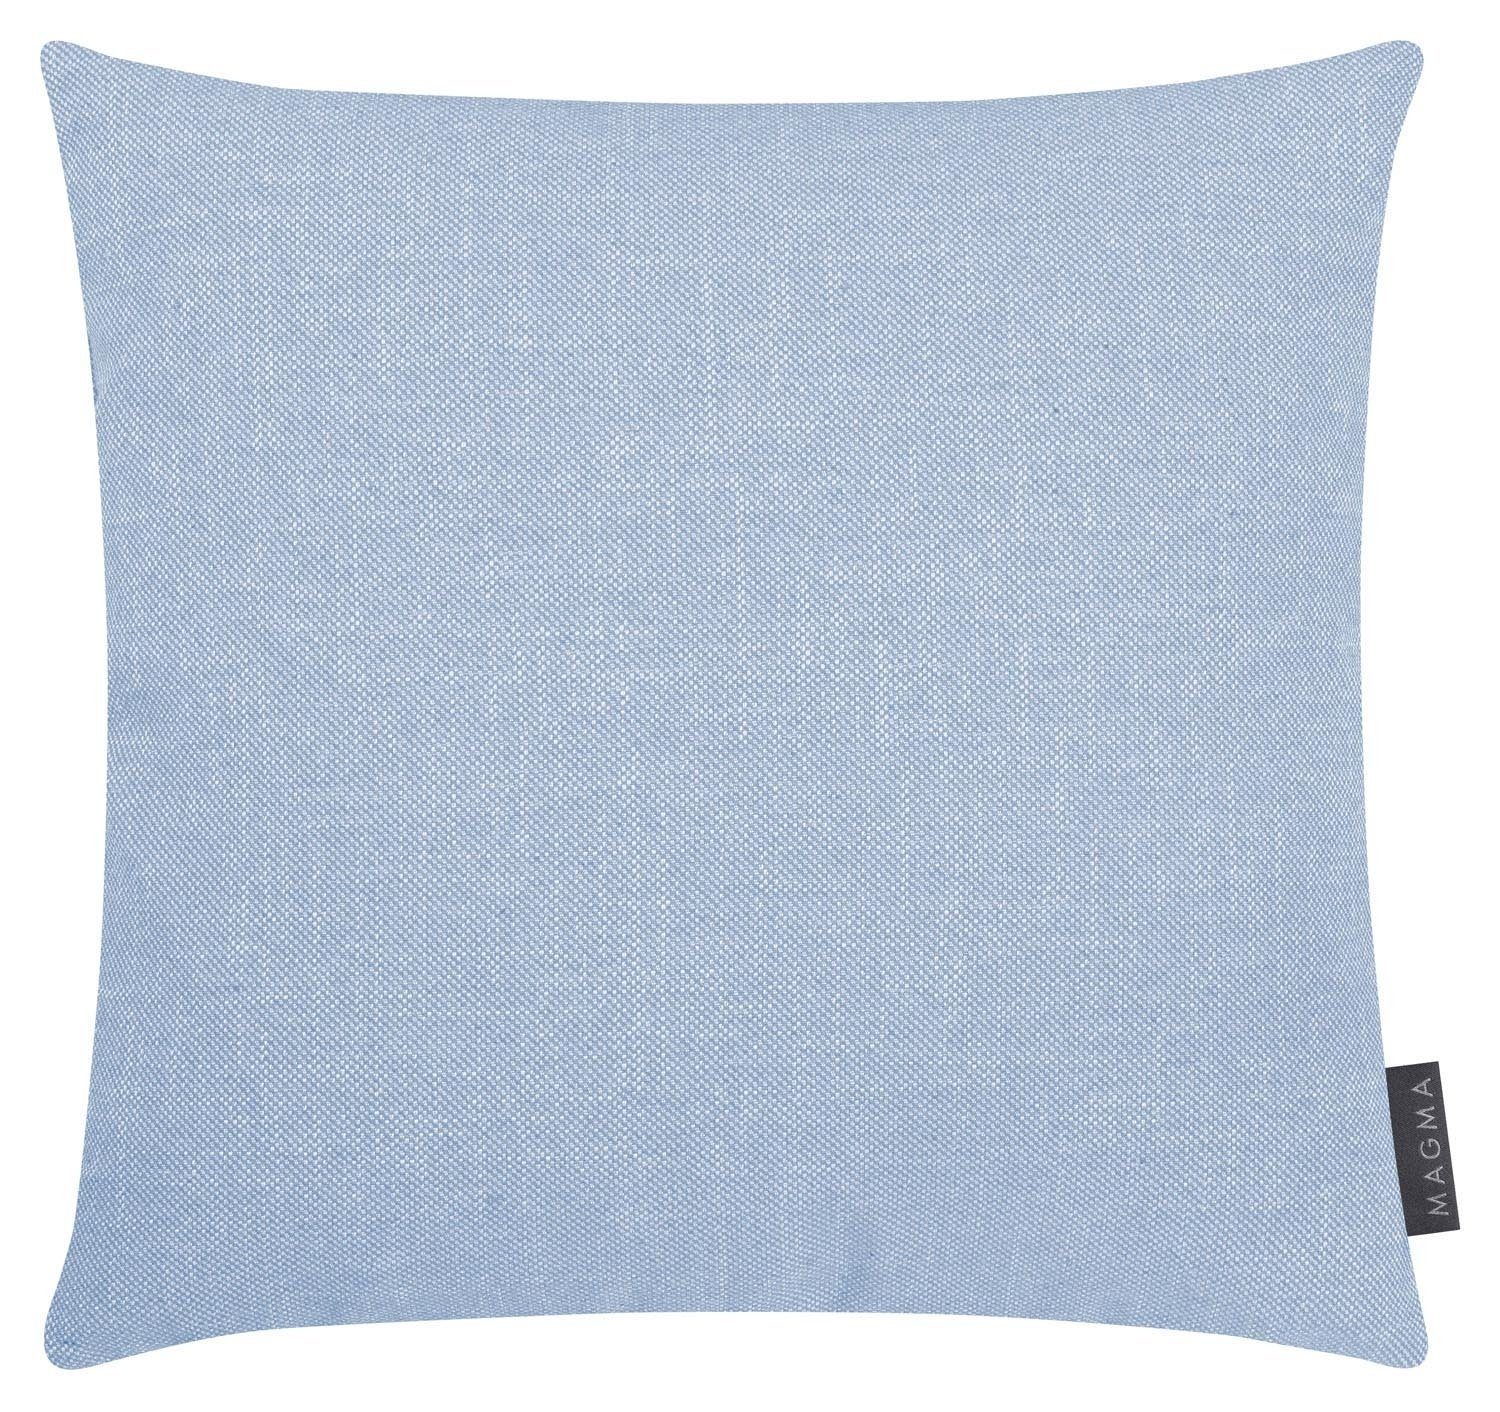 Kissenhülle RIVA, Blau, Muster, Baumwolle, 40 x 40 cm, Magma Heimtex (1 Stück)